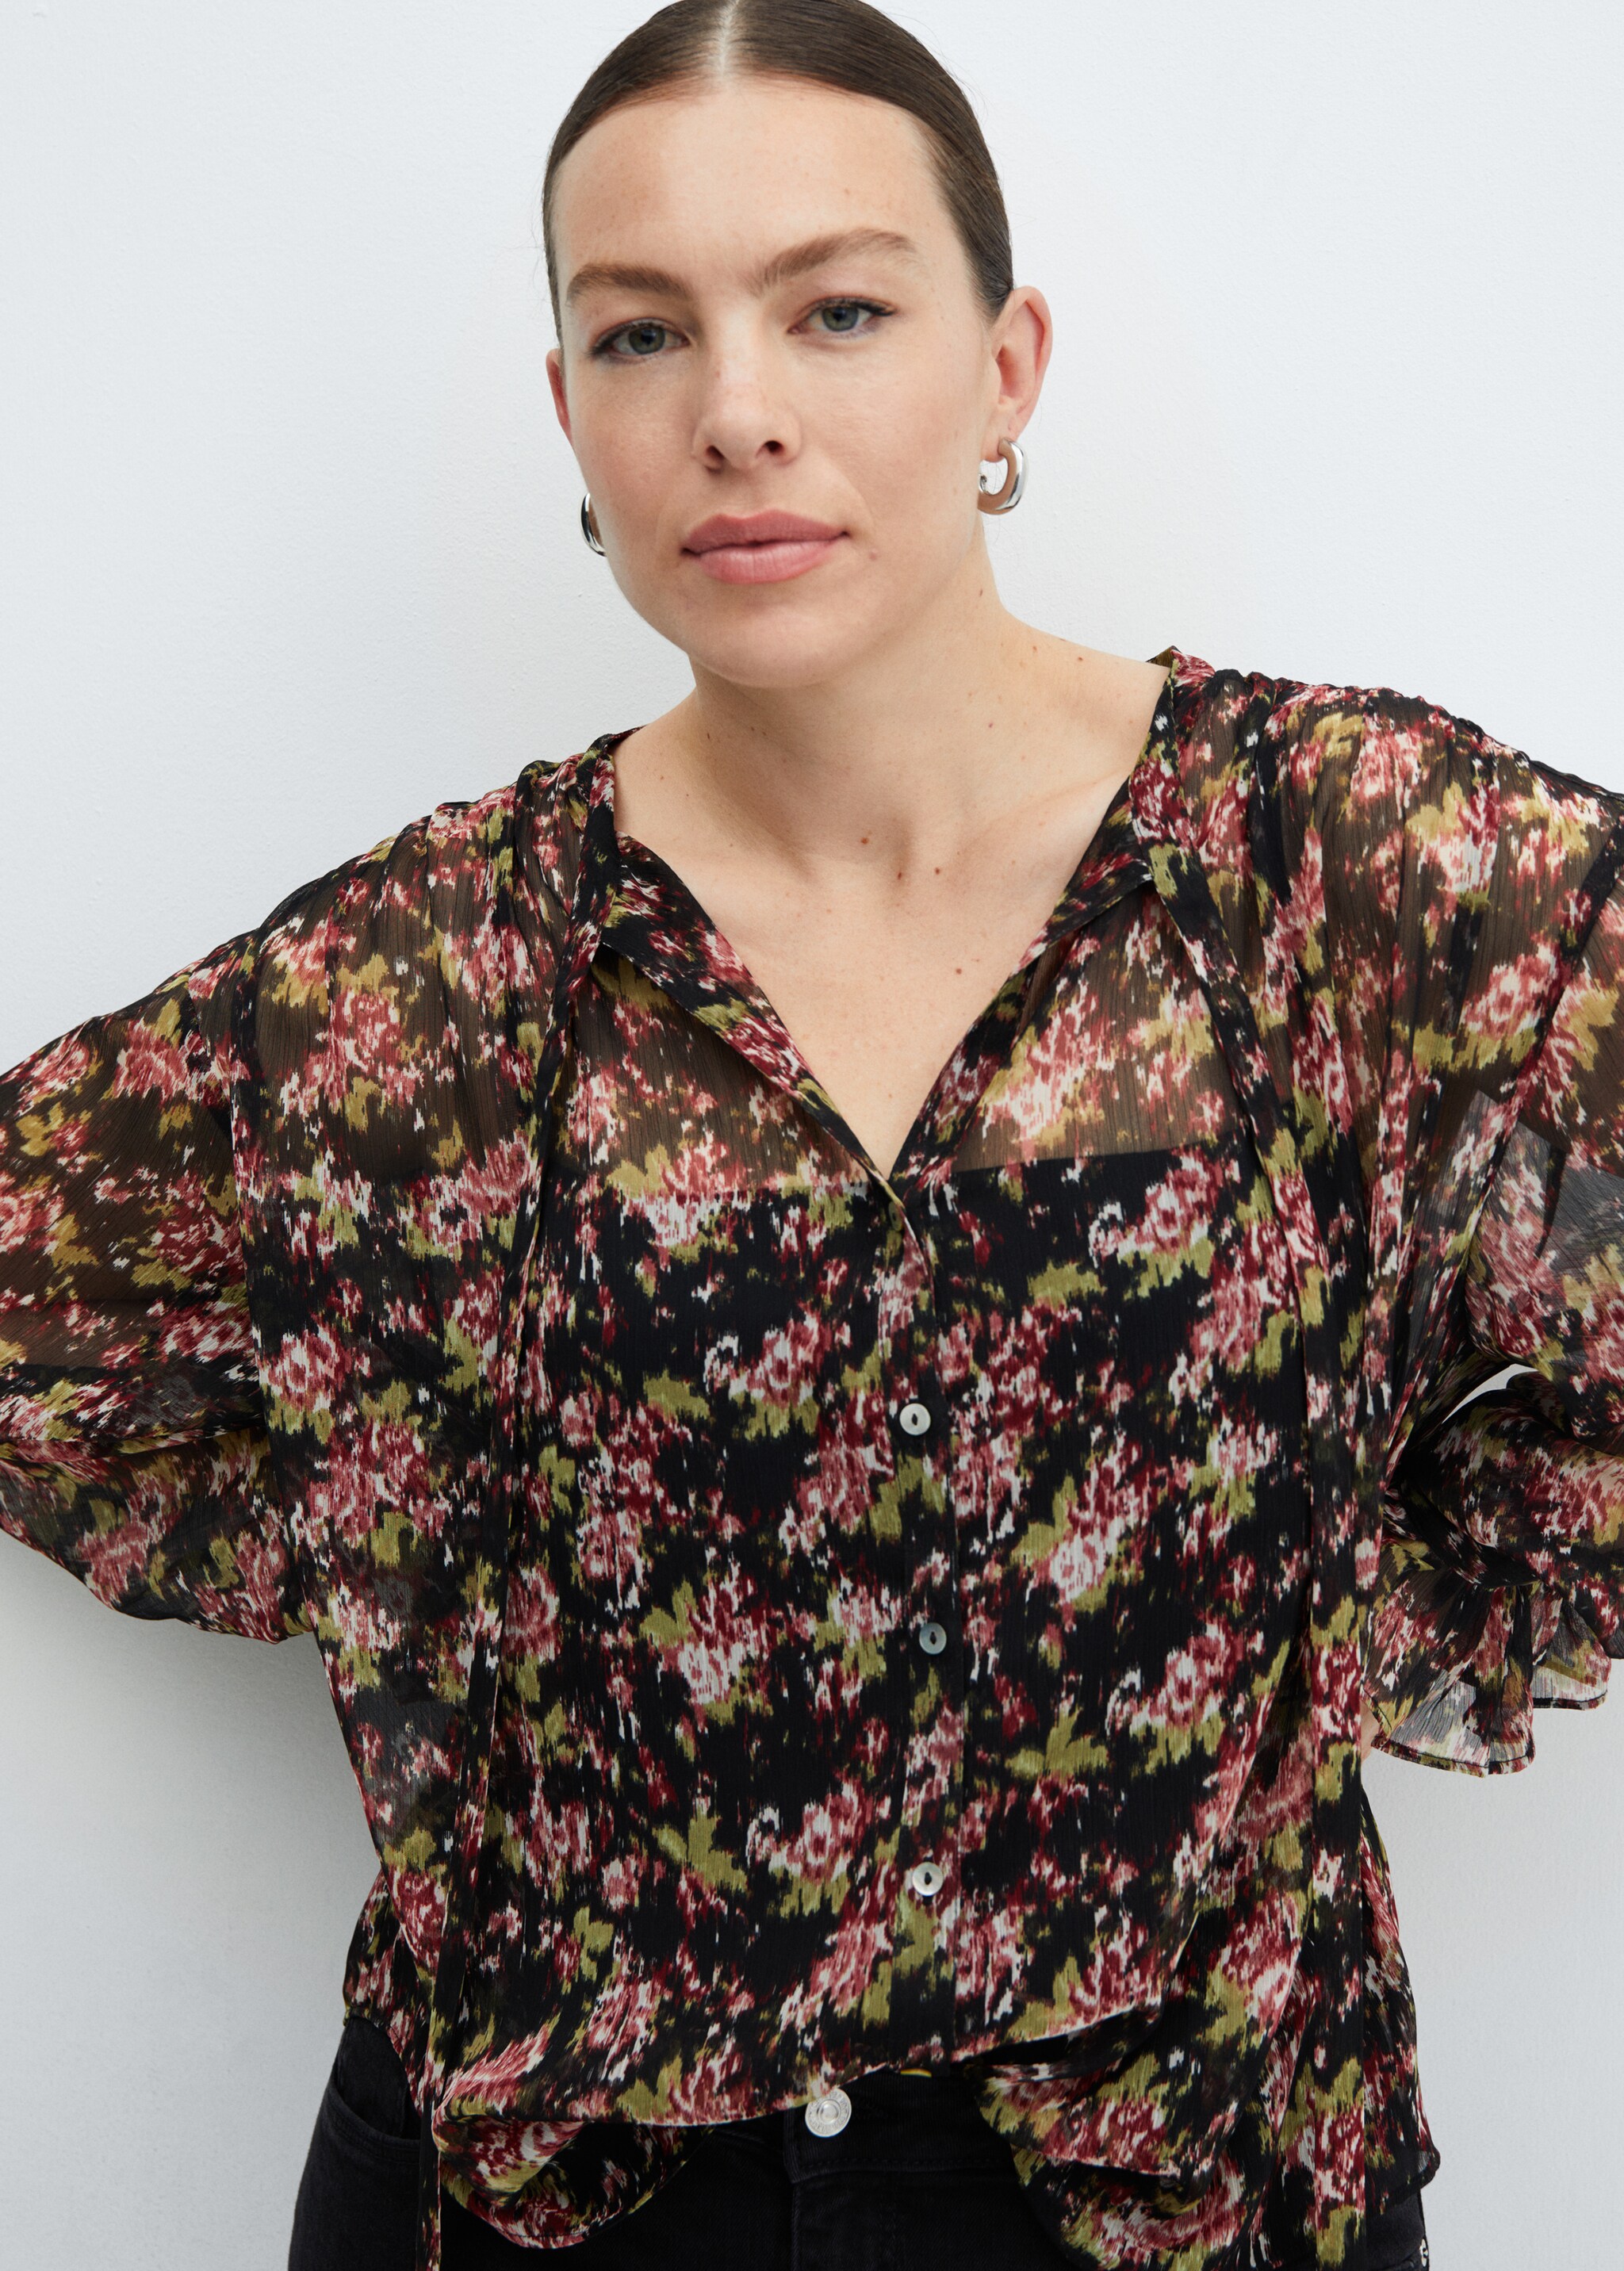 Semi-transparent floral blouse - Details of the article 4